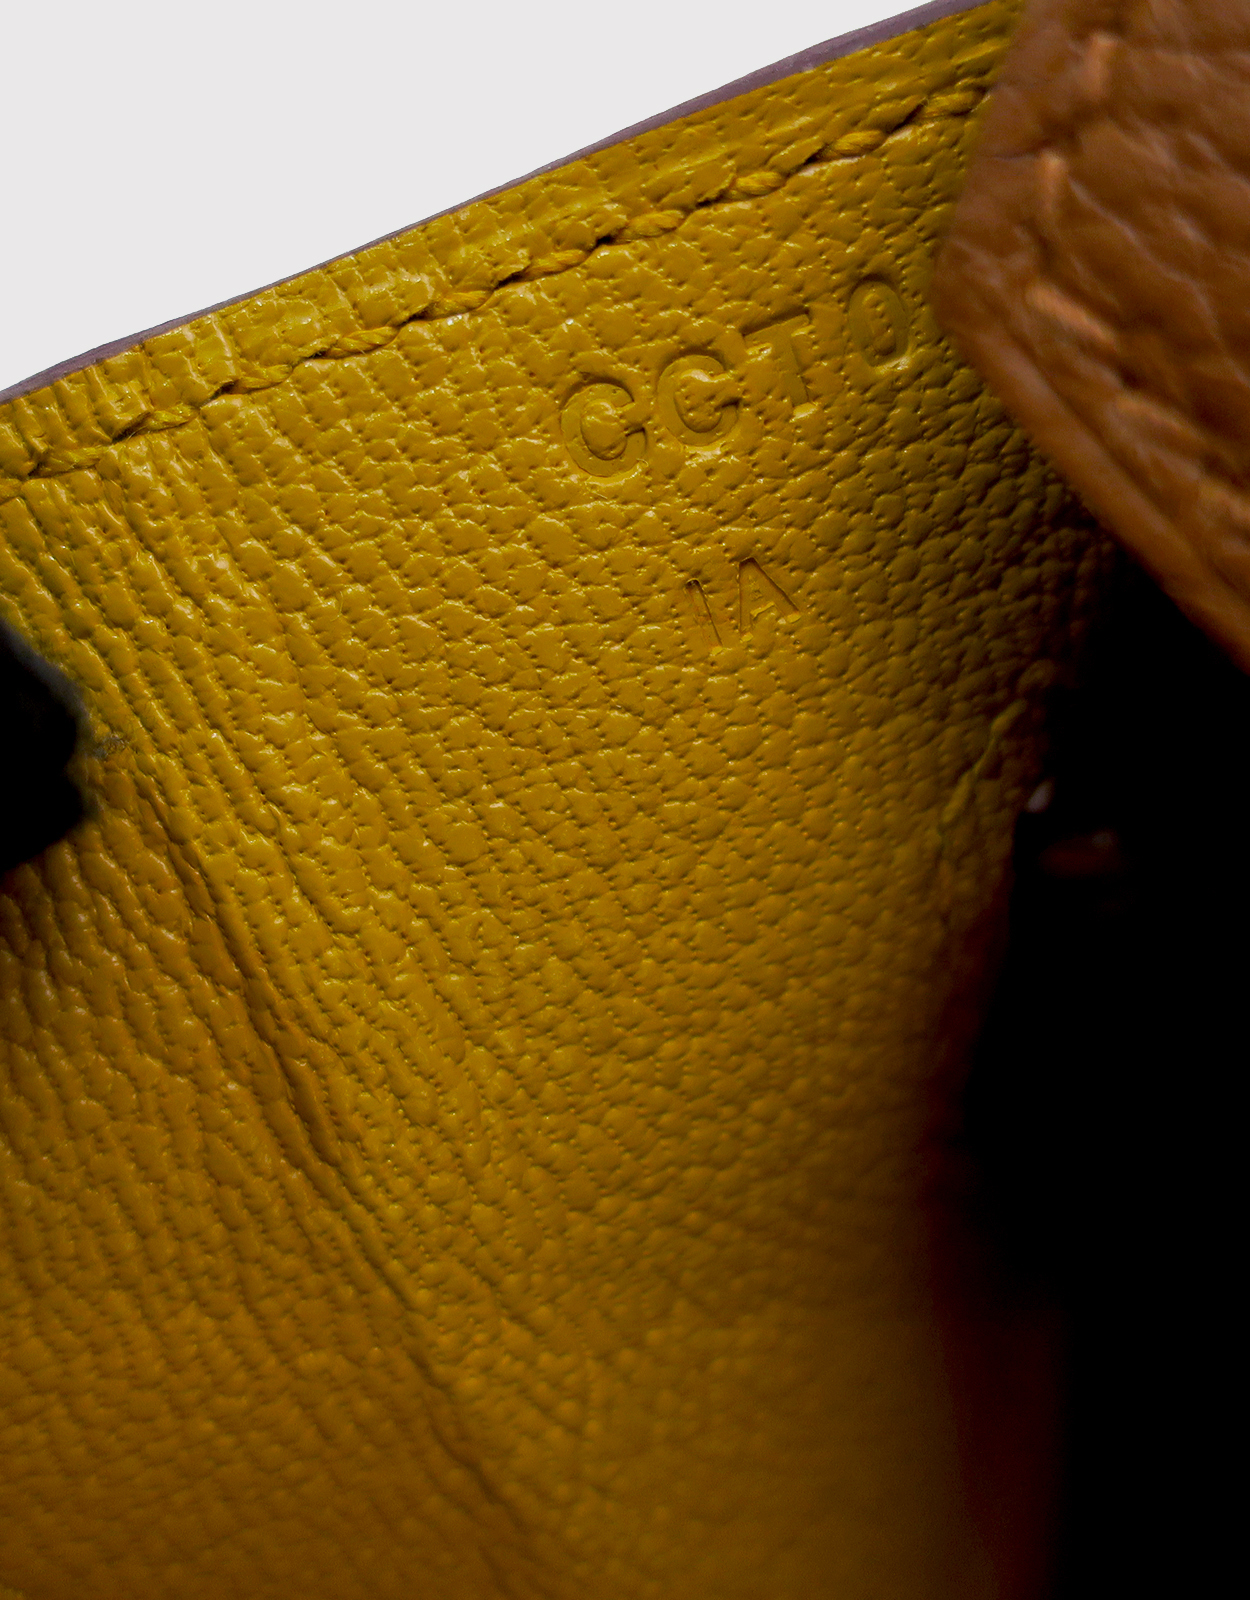 Birkin 30 leather handbag Hermès Camel in Leather - 24938134